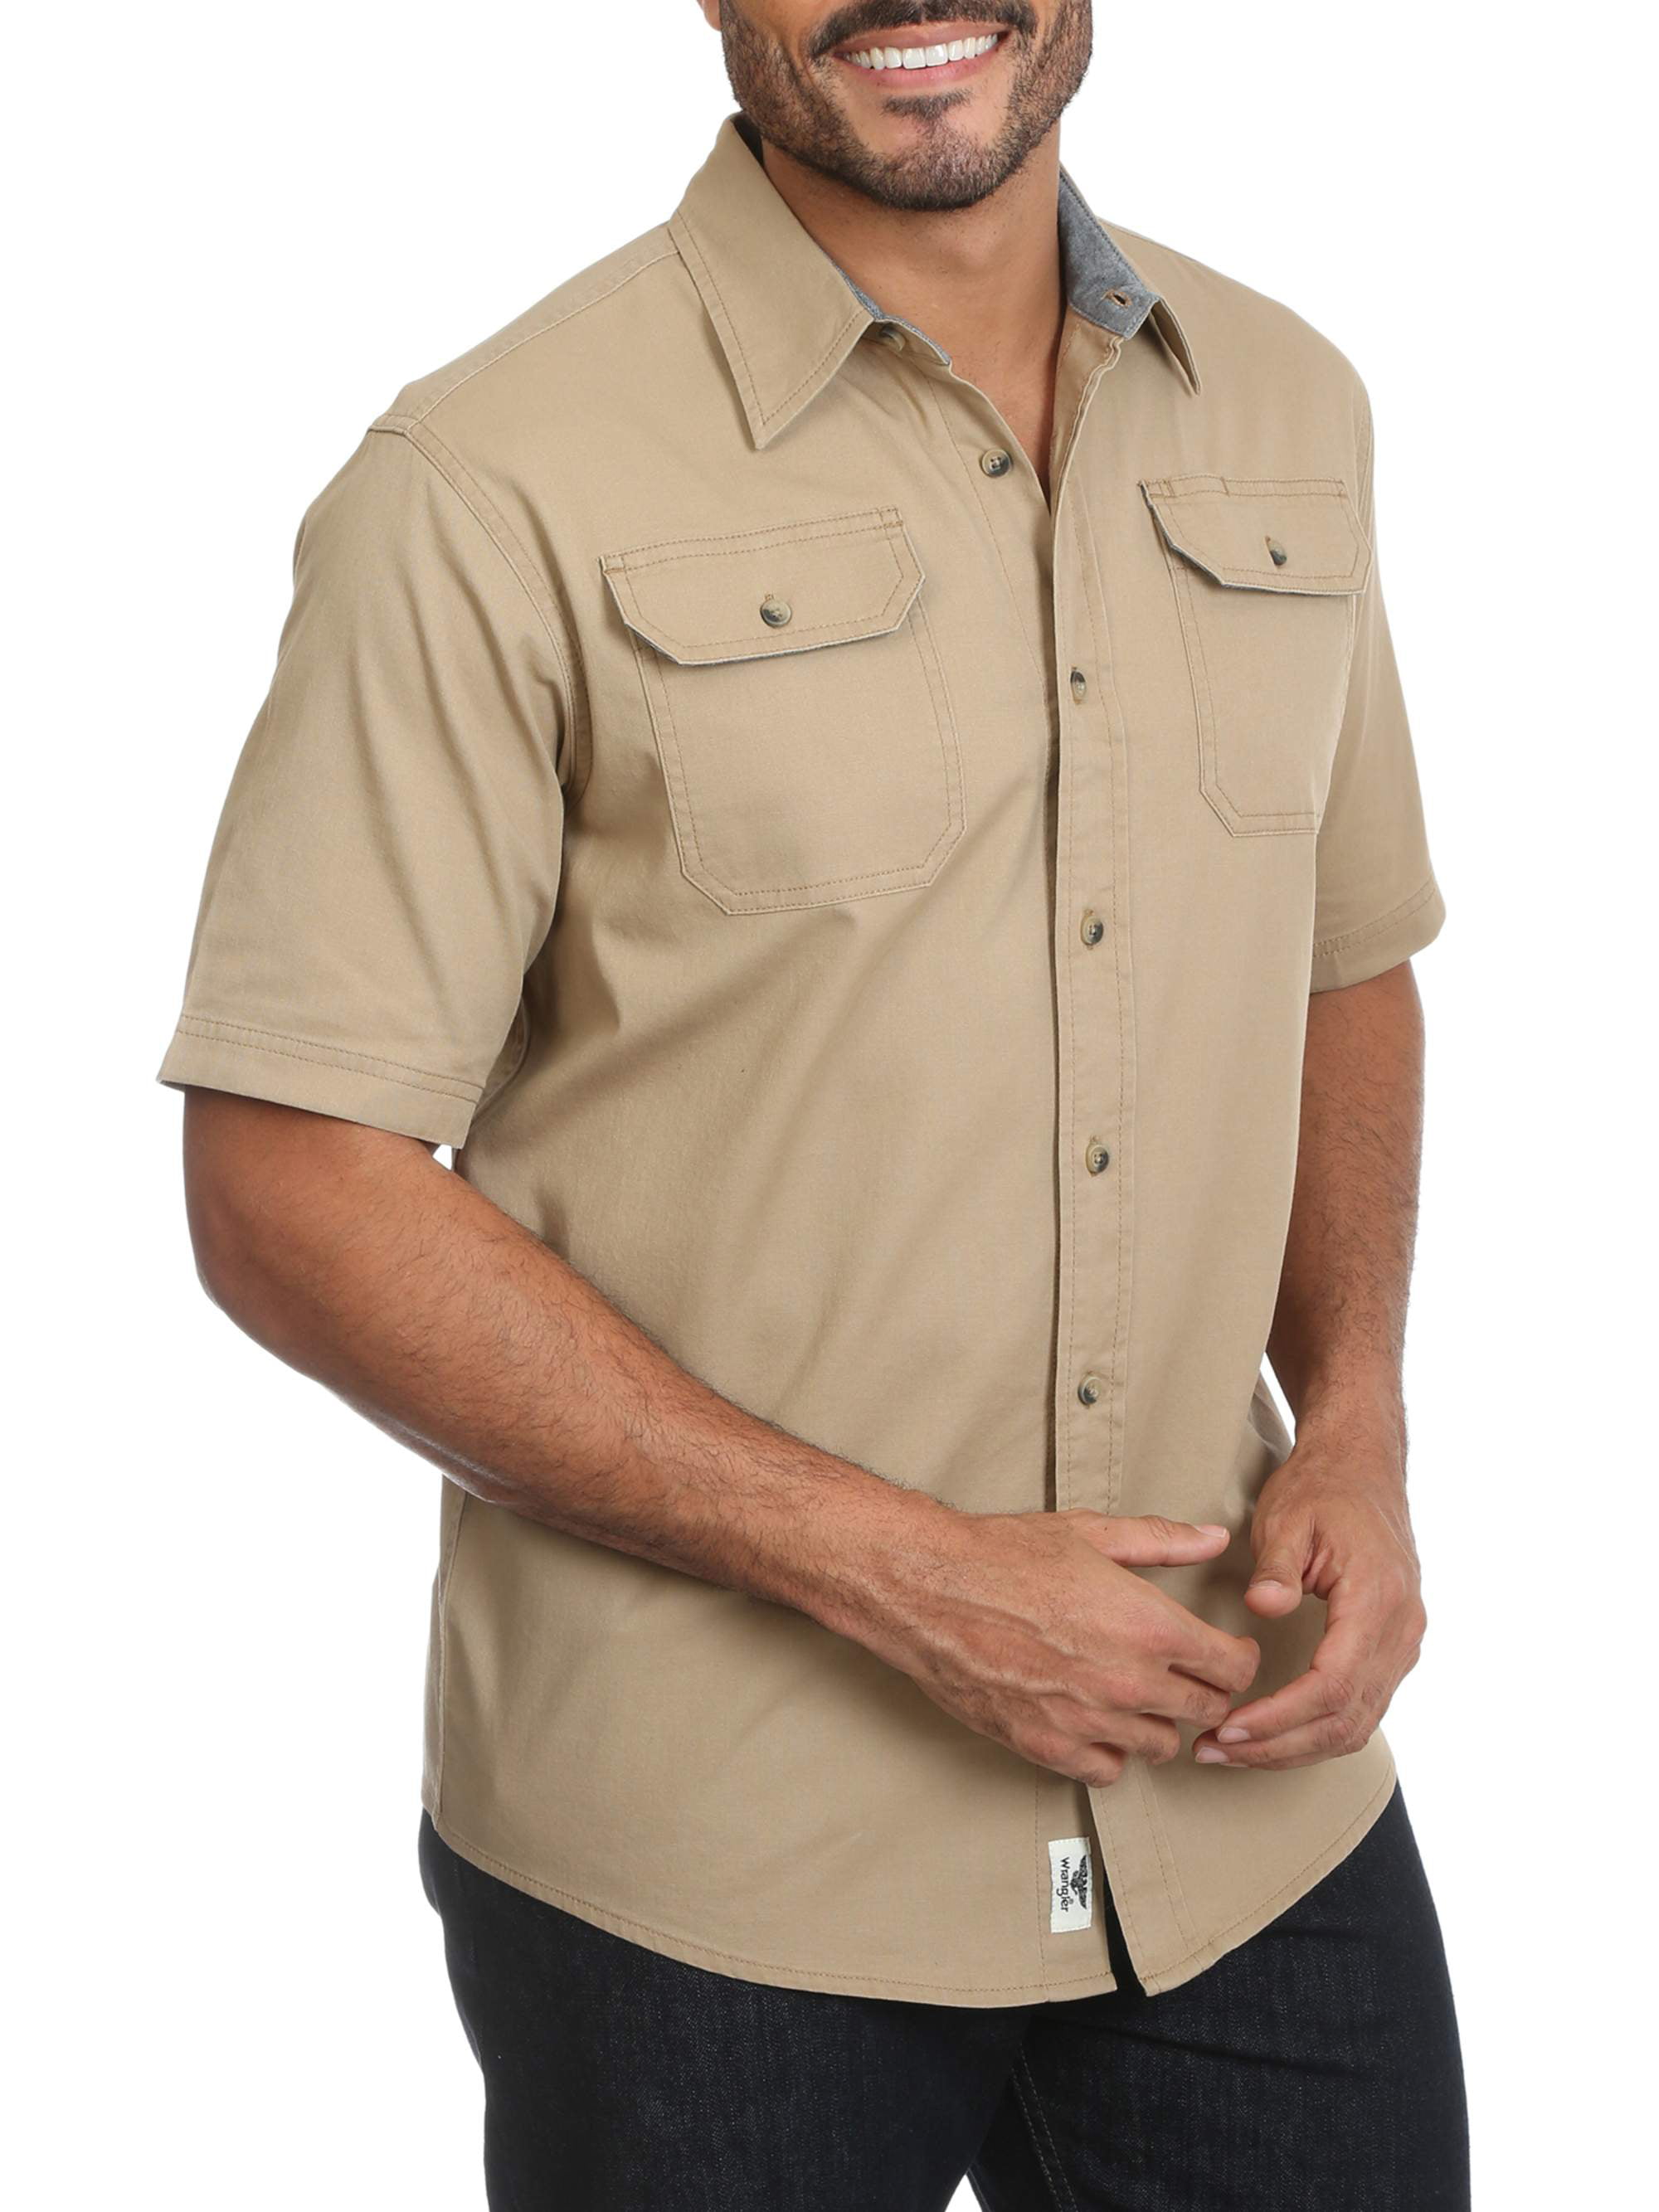 Men's Short Sleeve Twill Shirt - Walmart.com